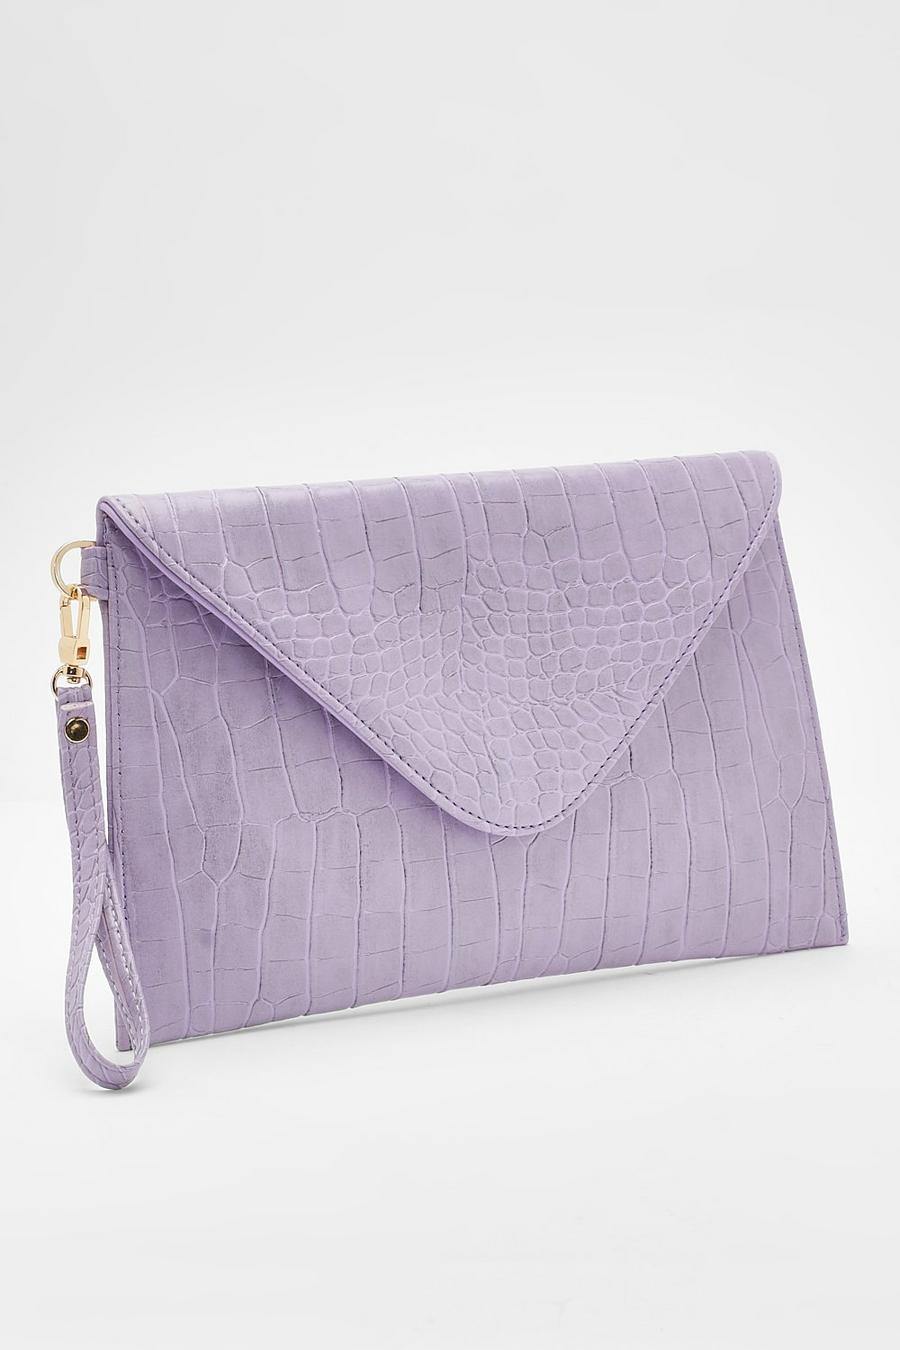 Pochette style enveloppe, Lilac violet